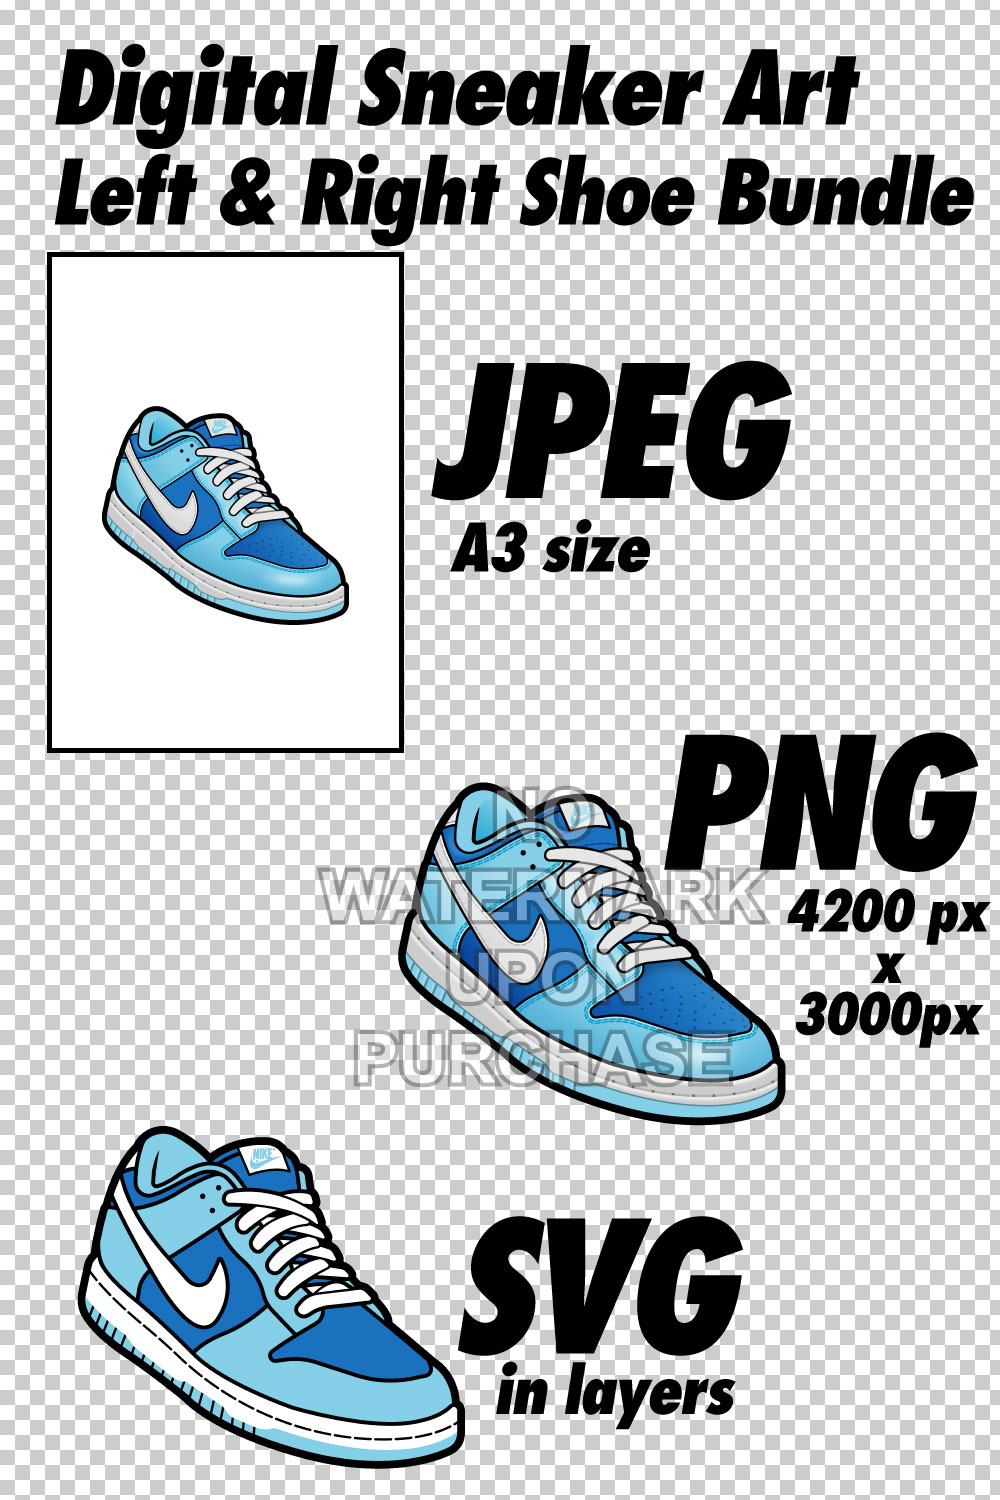 Dunk Low Argon JPEG PNG SVG digital download pinterest preview image.